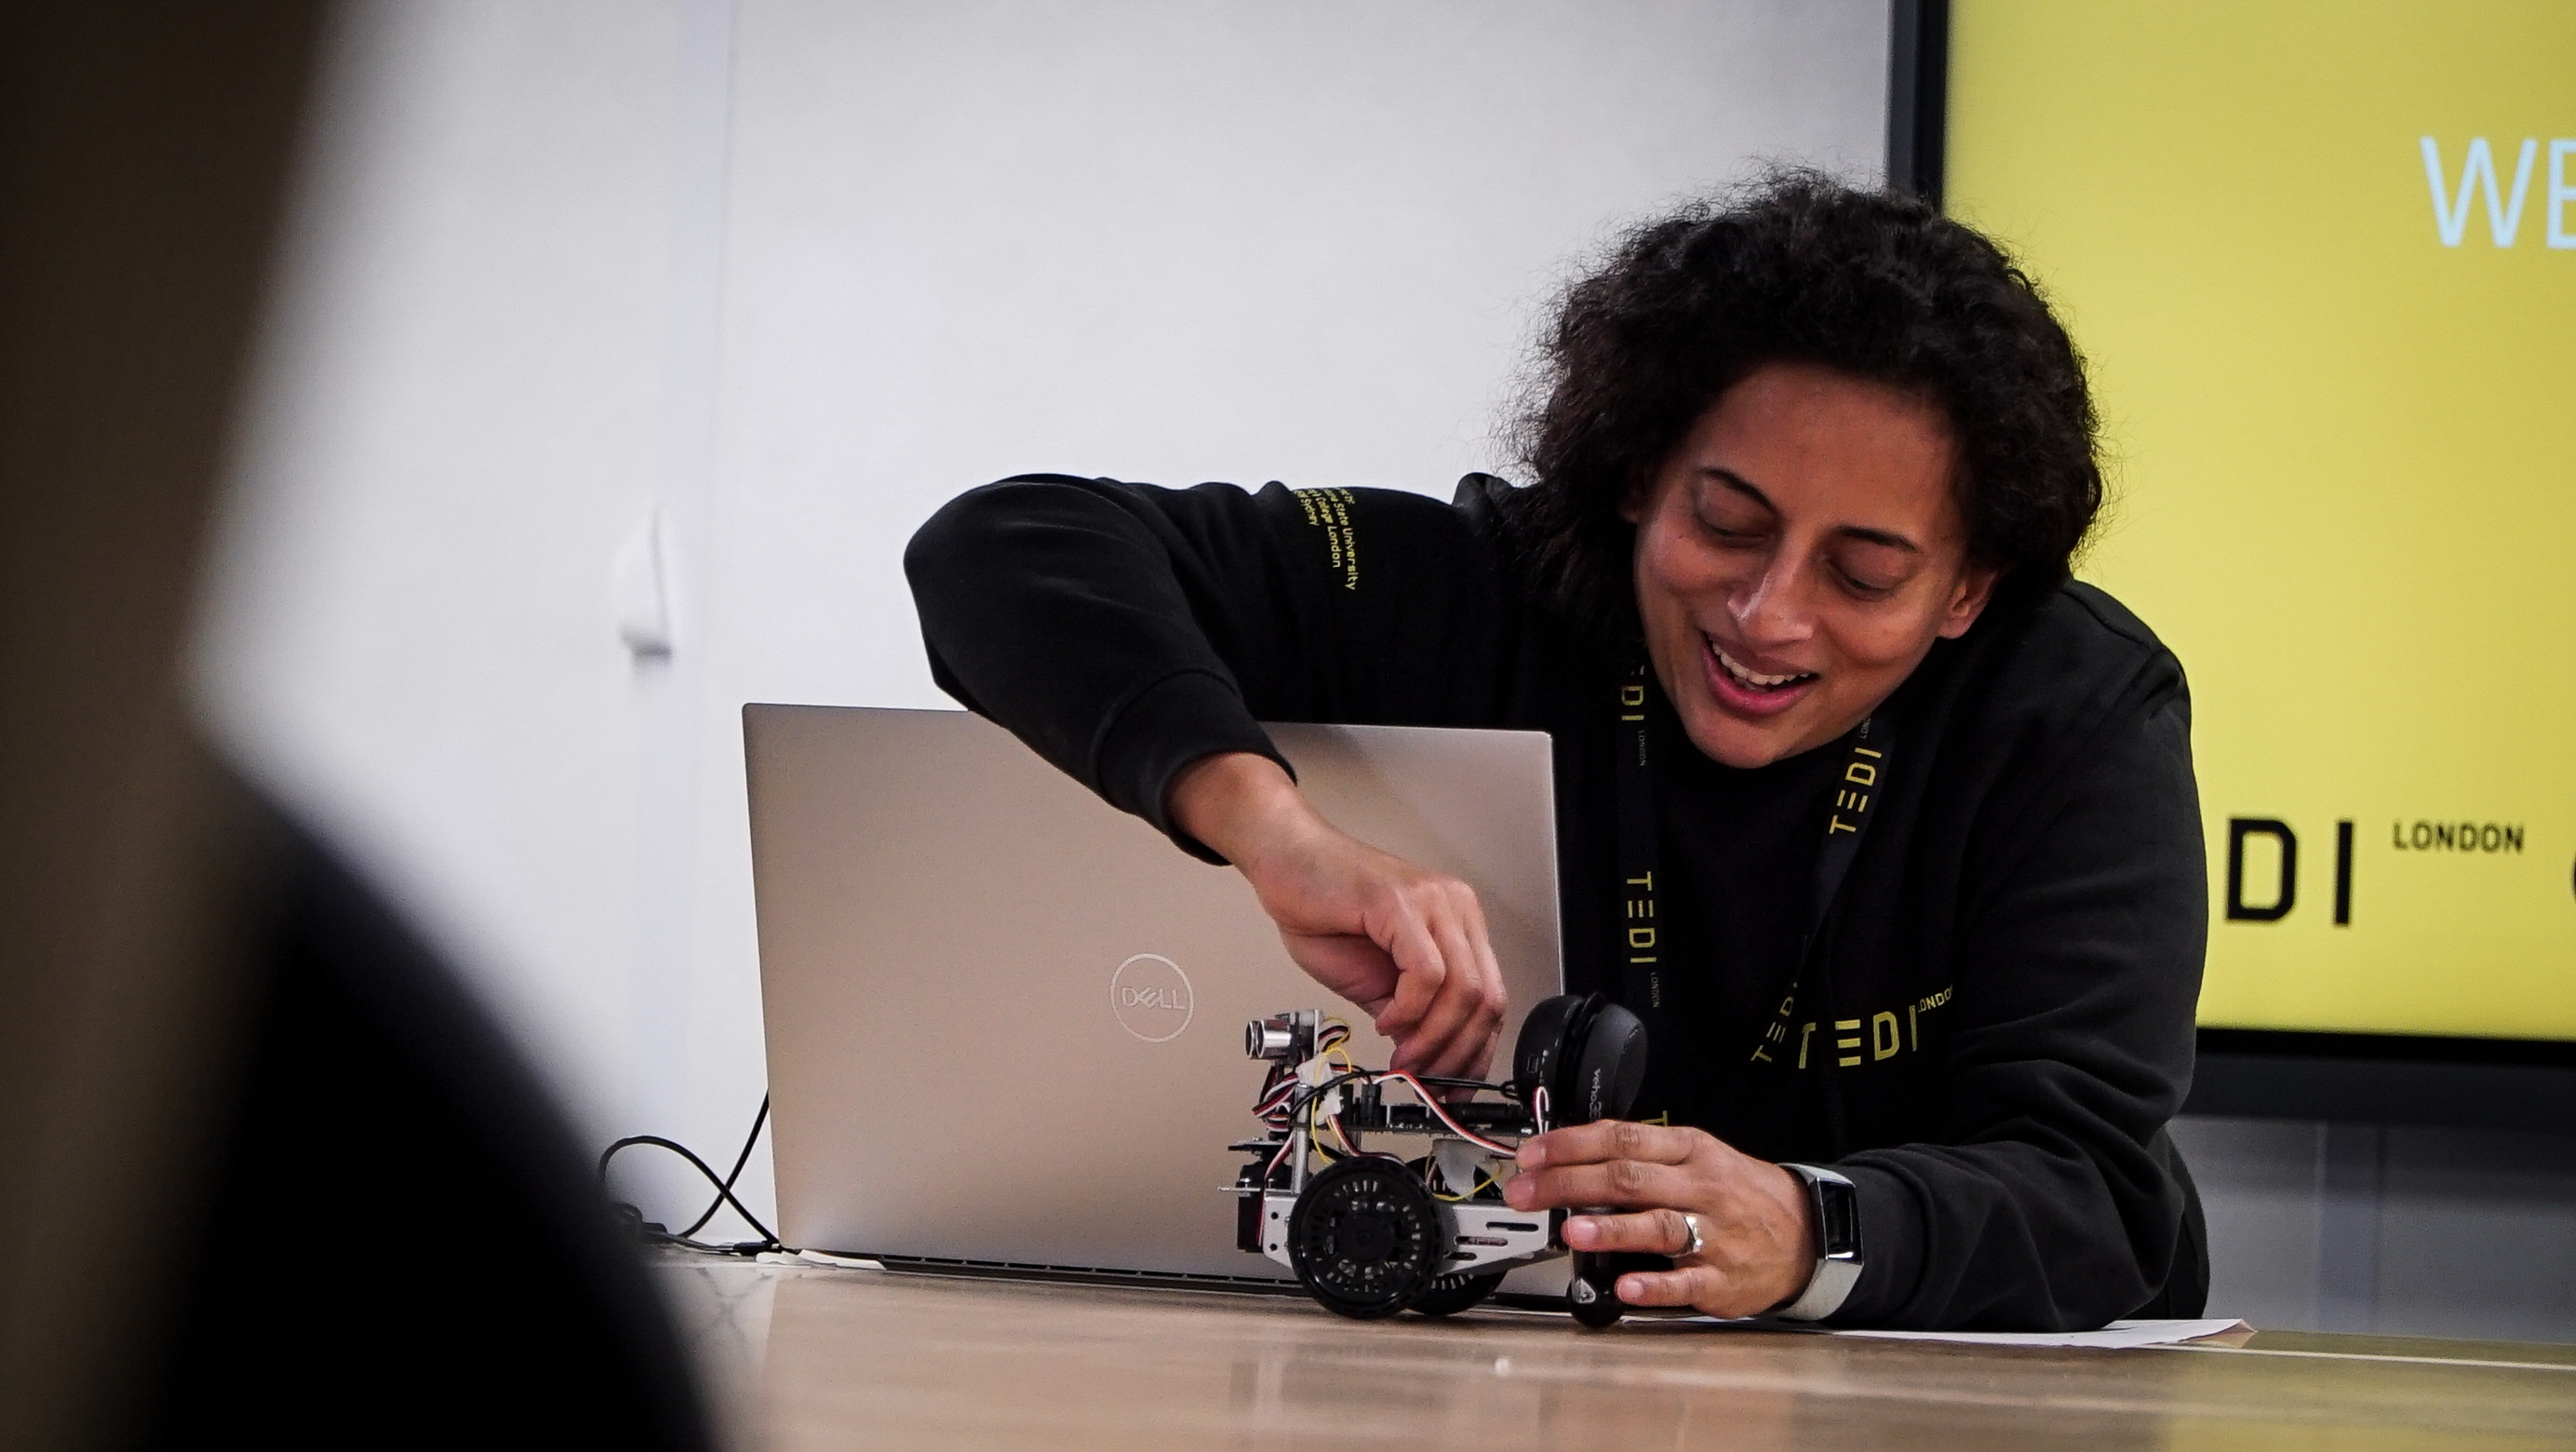 TEDI-London mature student working on robotics